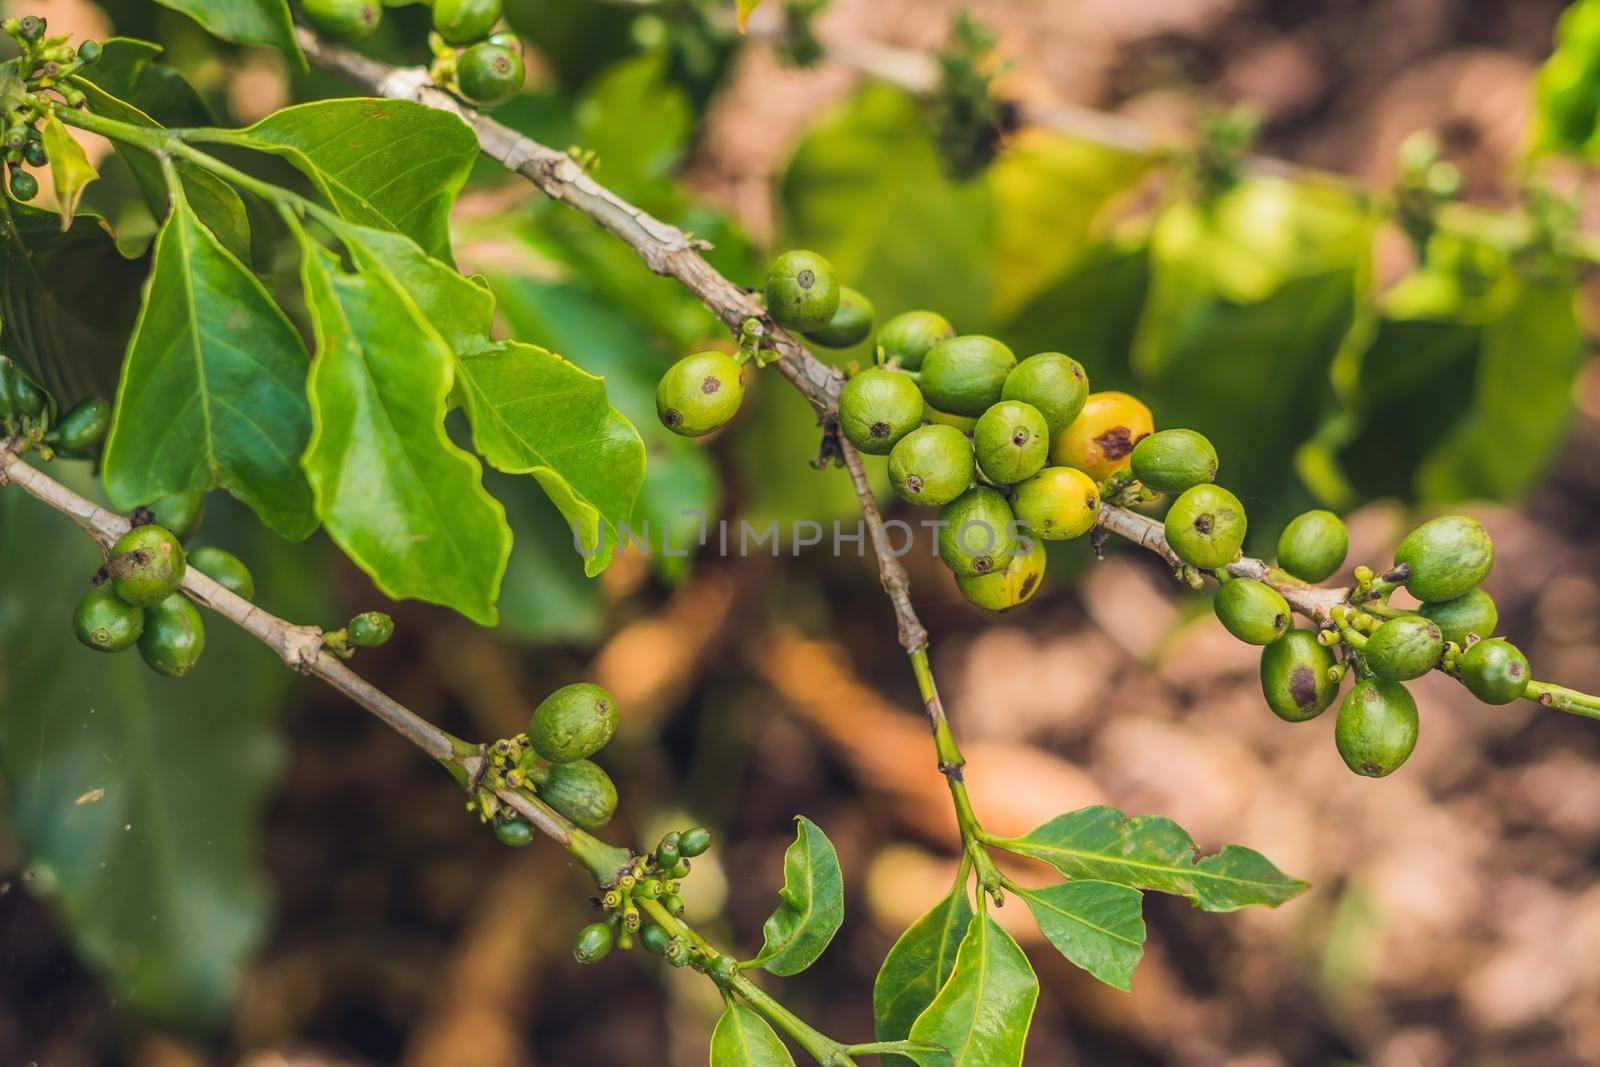 Unripe coffee beans on stem in Vietnam plantation by galitskaya